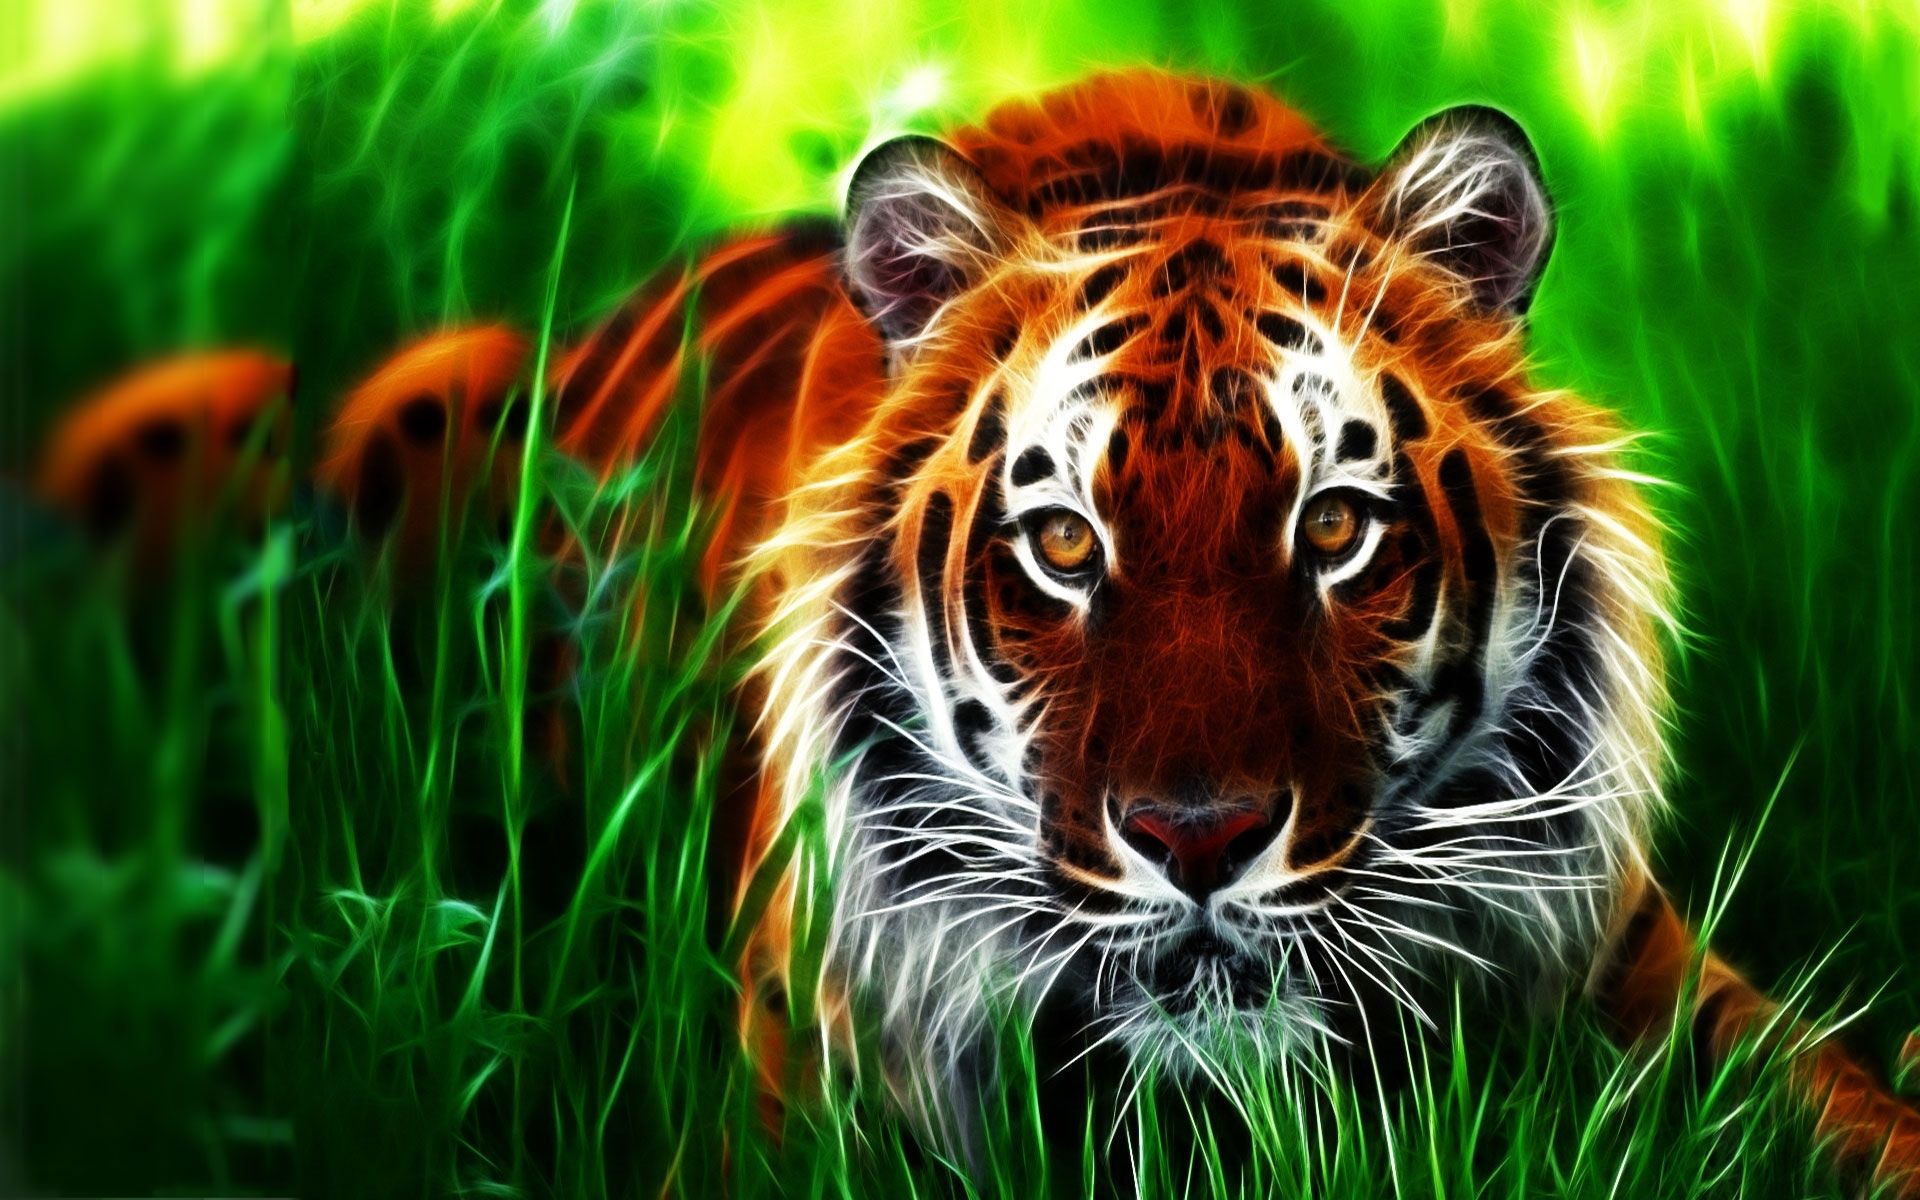 Tiger wallpapers â